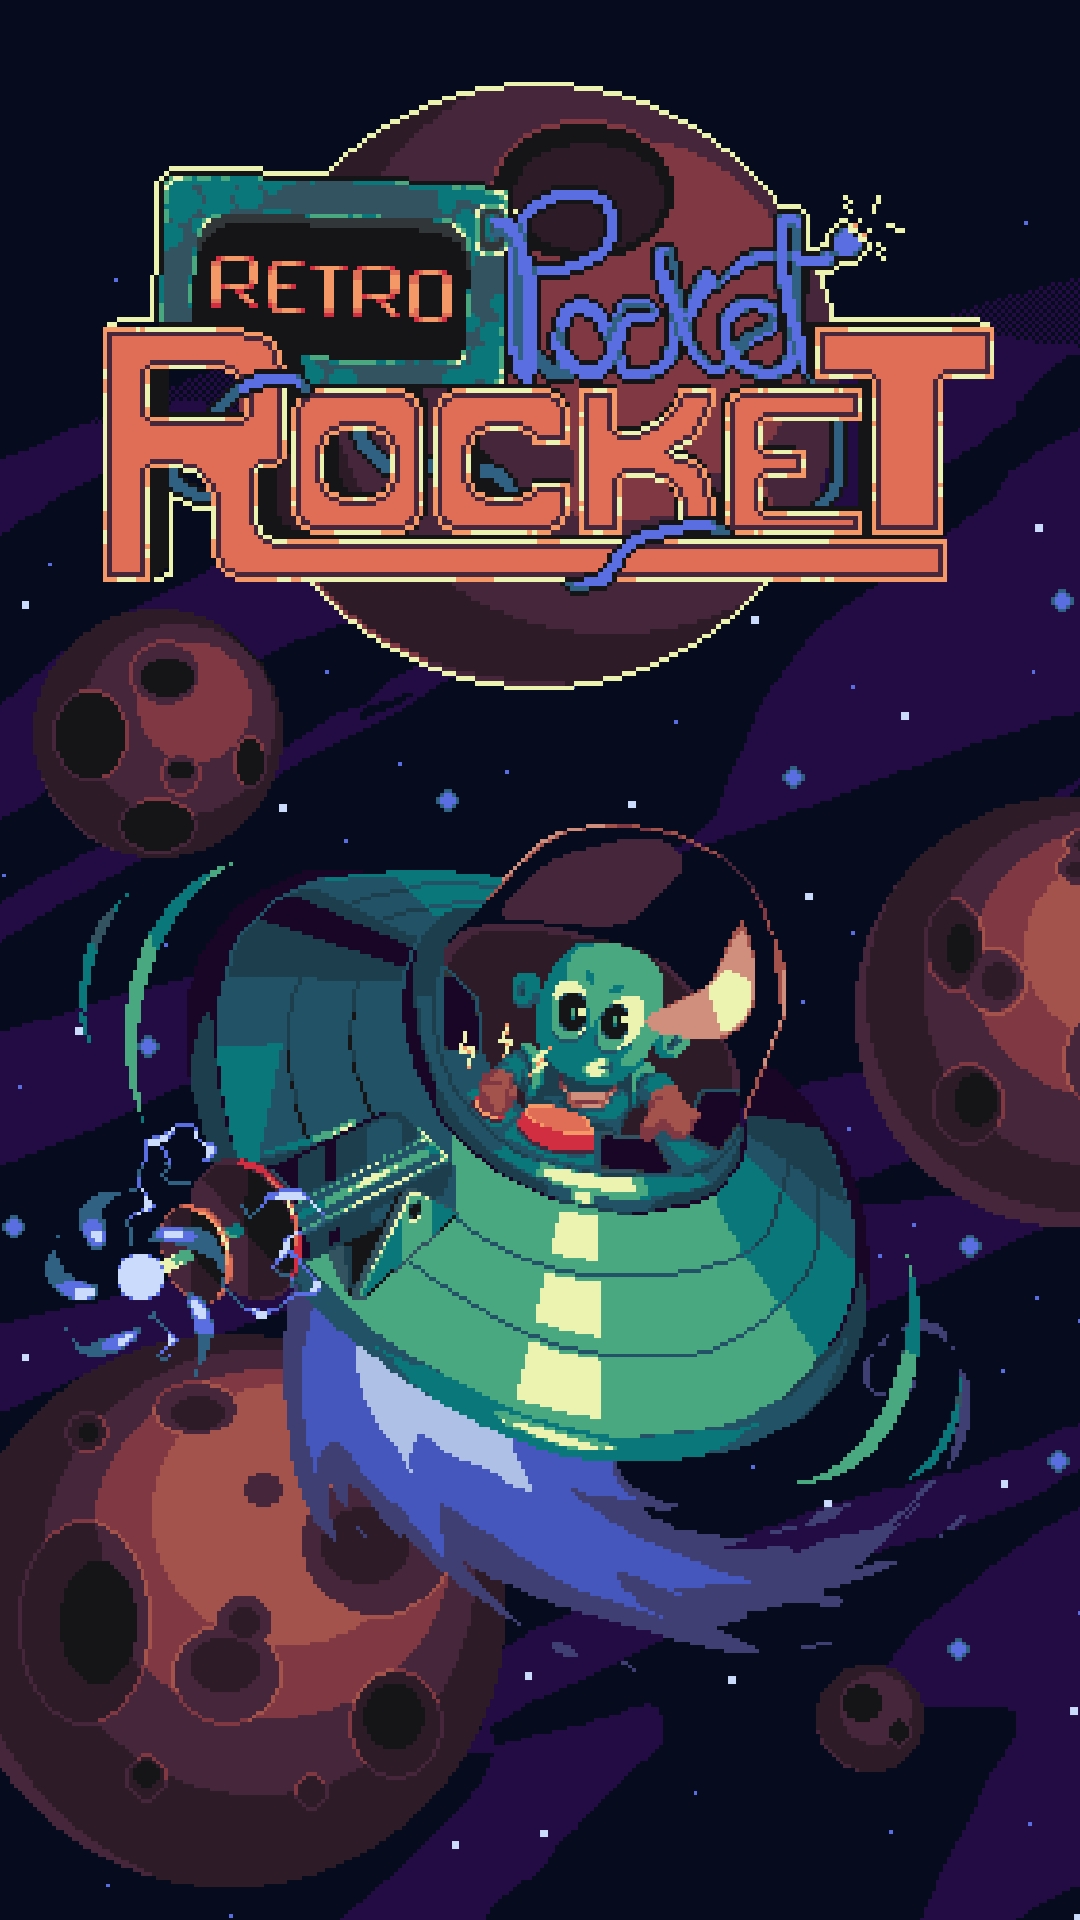 Retro Pocket Rocket for Android